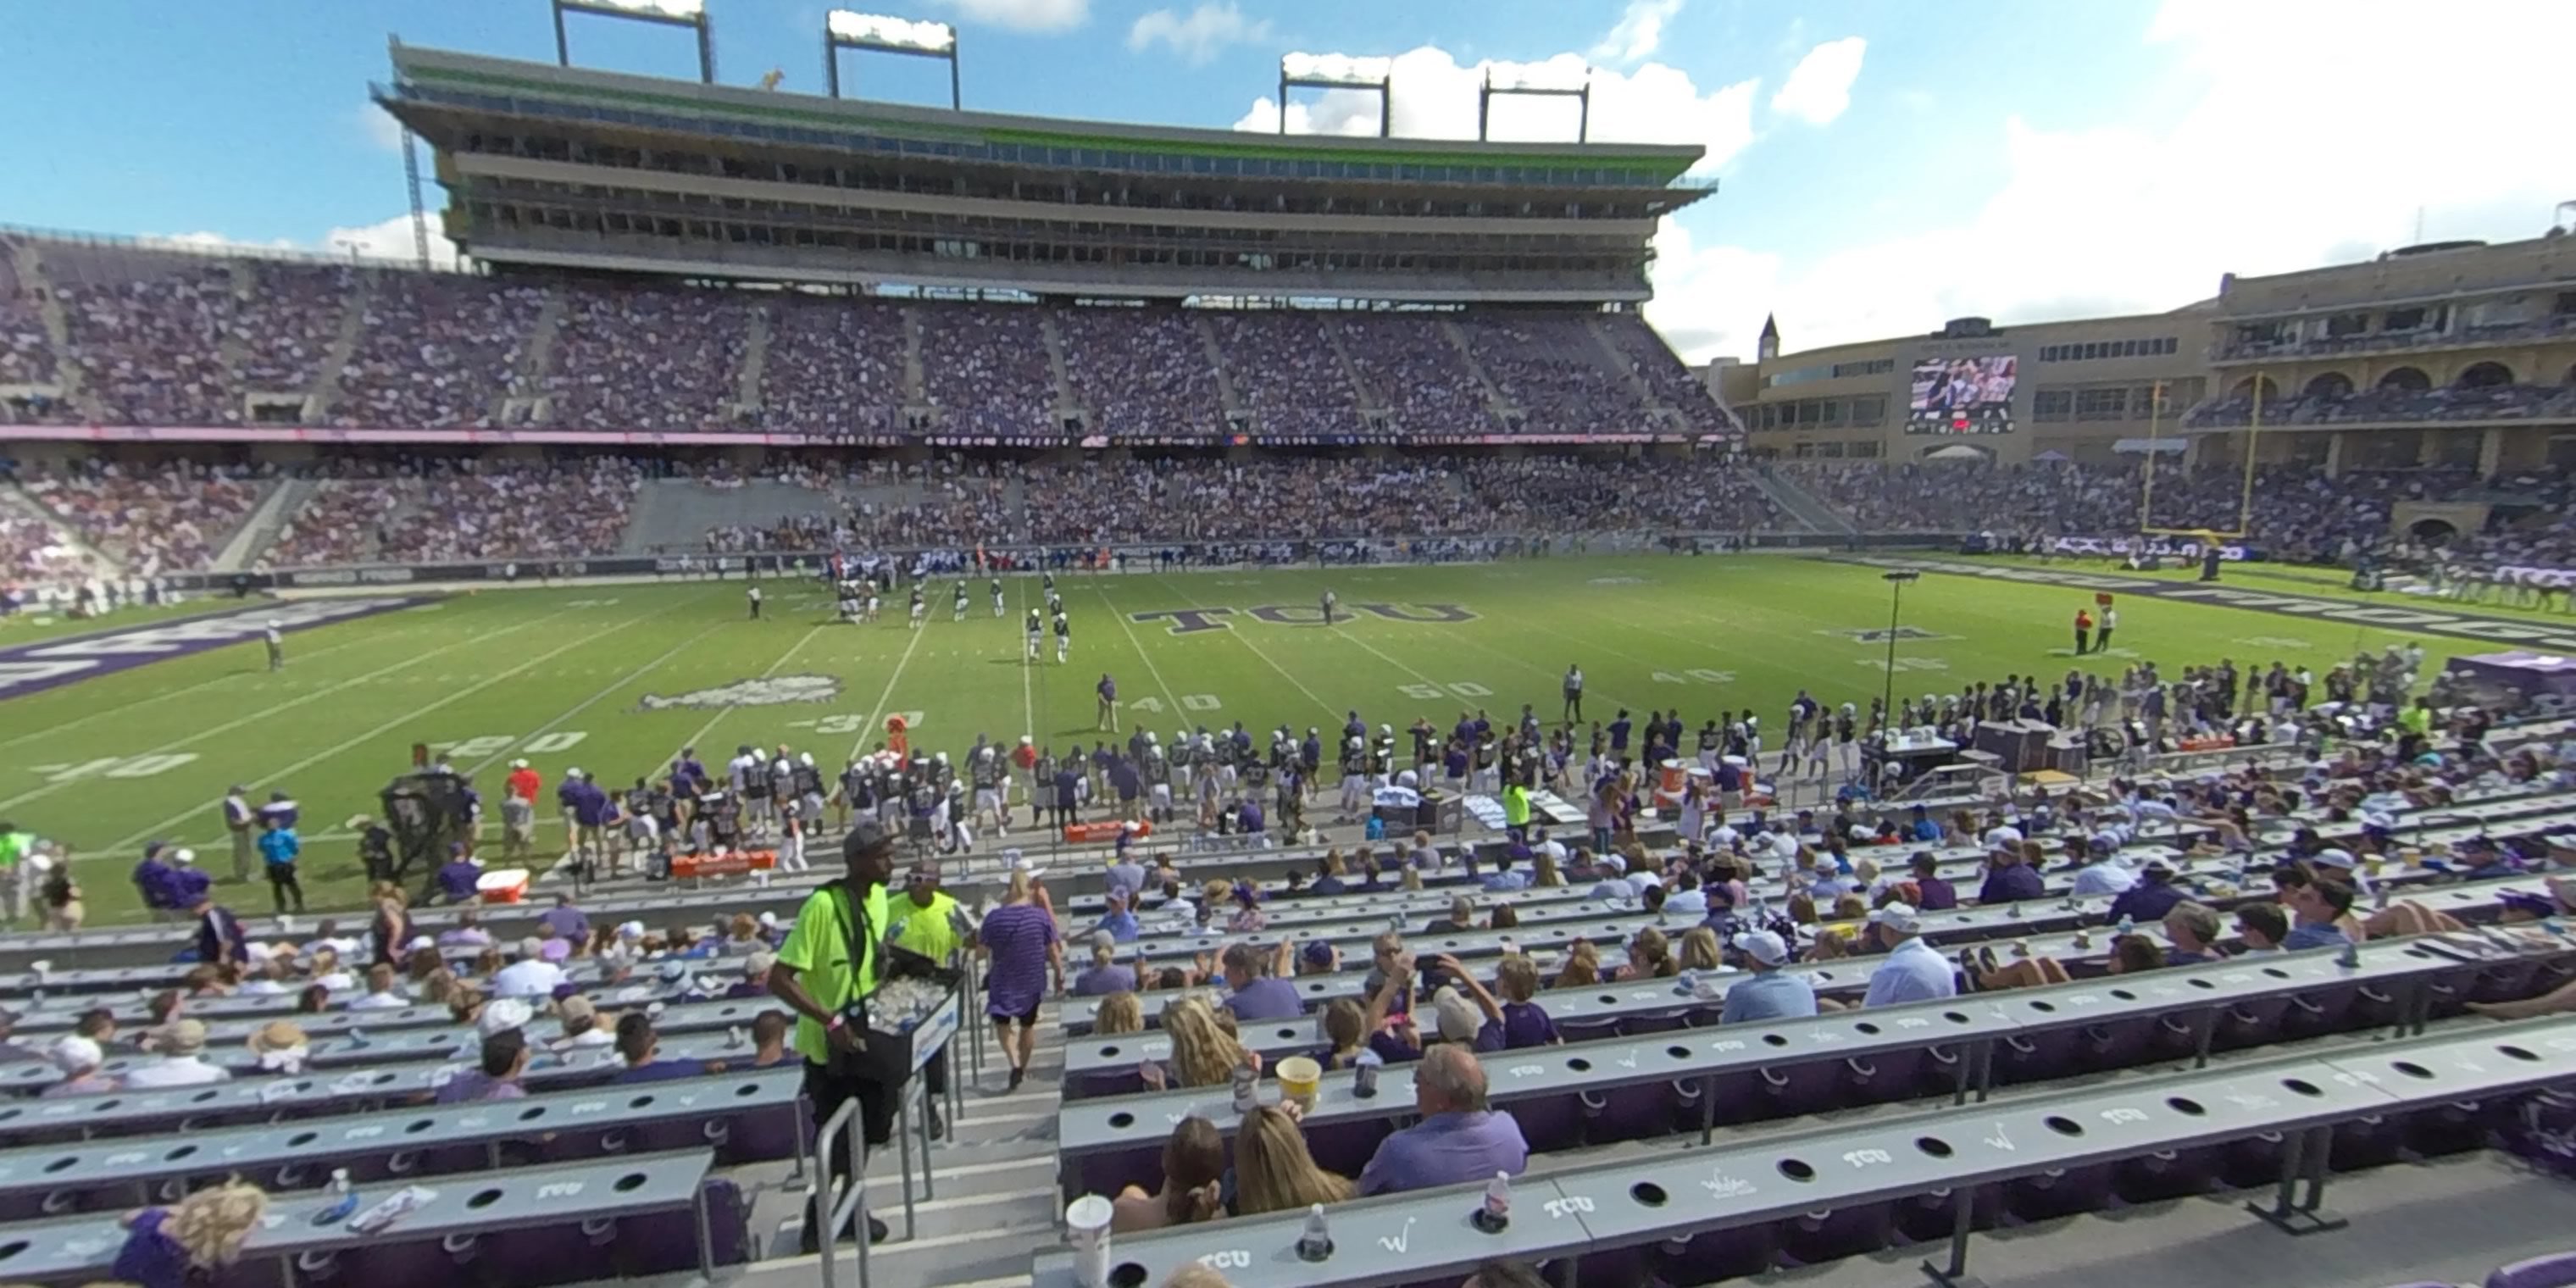 section 105 panoramic seat view  - amon carter stadium